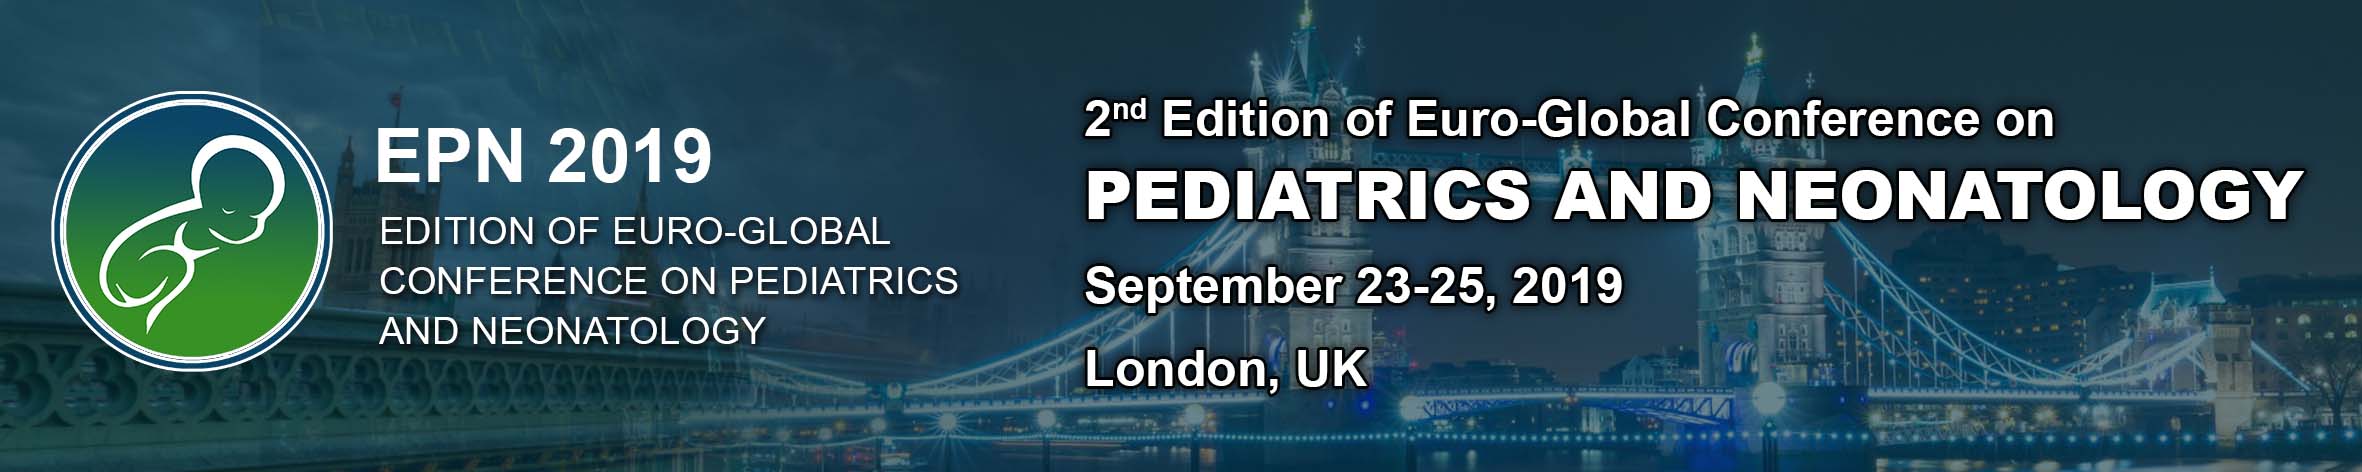 2nd Edition of Euro-Global Conference on Pediatrics and Neonatology, London, England, United Kingdom